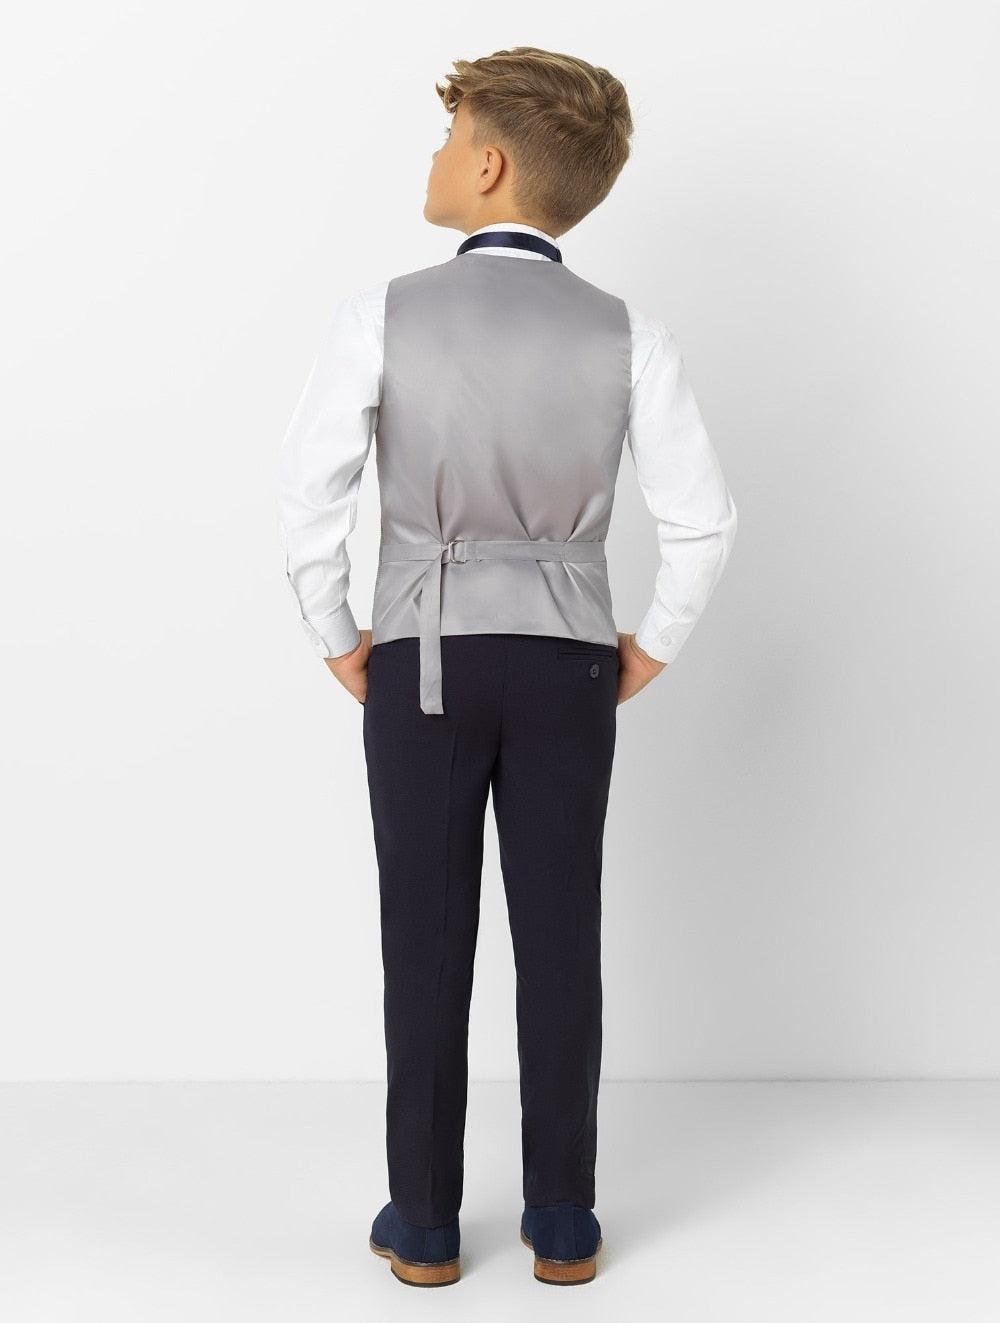 James Three Pieces ((Jacket+Pants+Vest) - luxebabyco